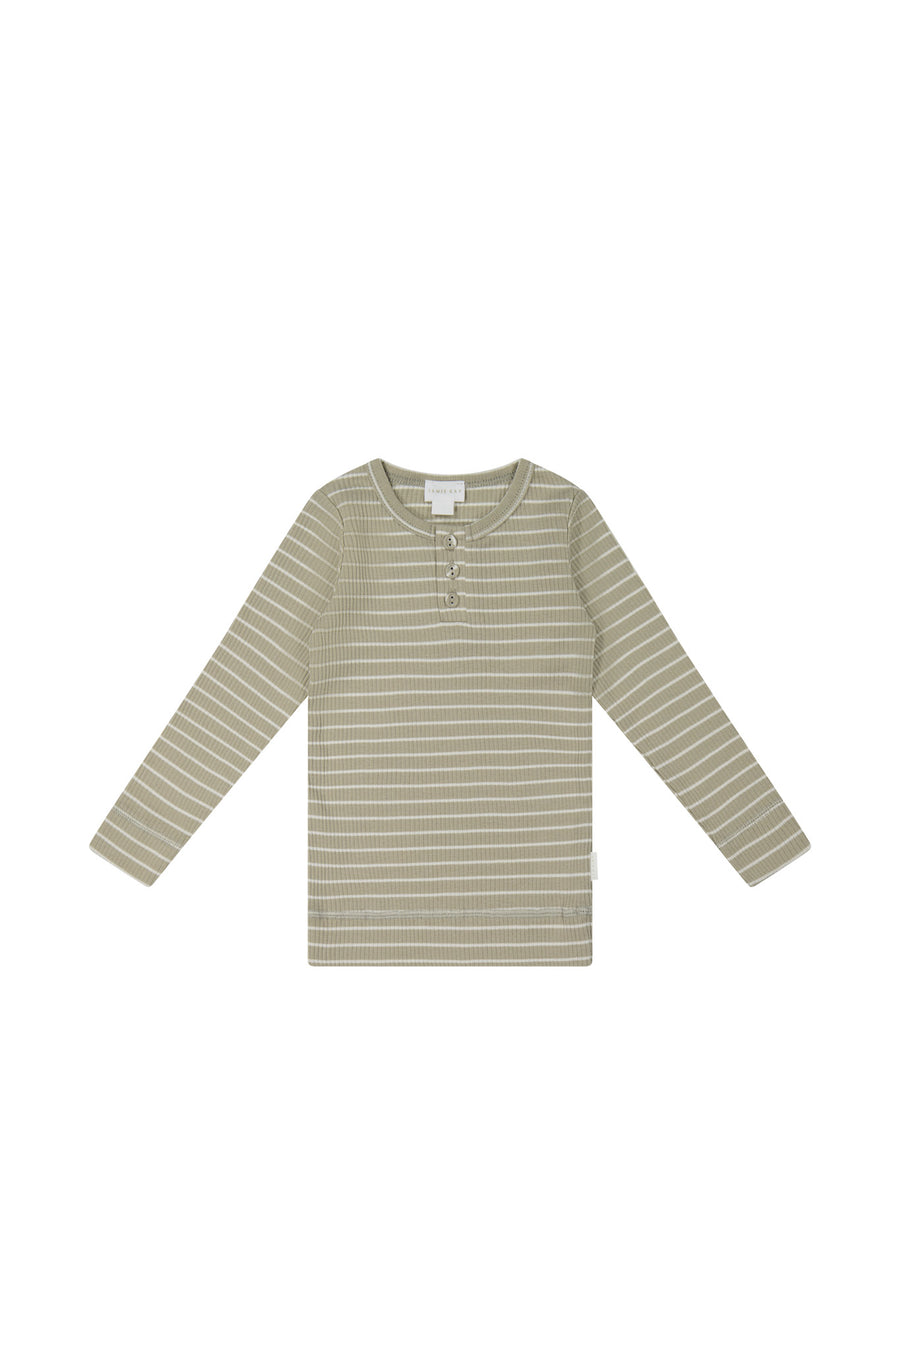 Organic Cotton Modal Long Sleeve Henley - Cashew/Cloud Stripe Childrens Top from Jamie Kay NZ